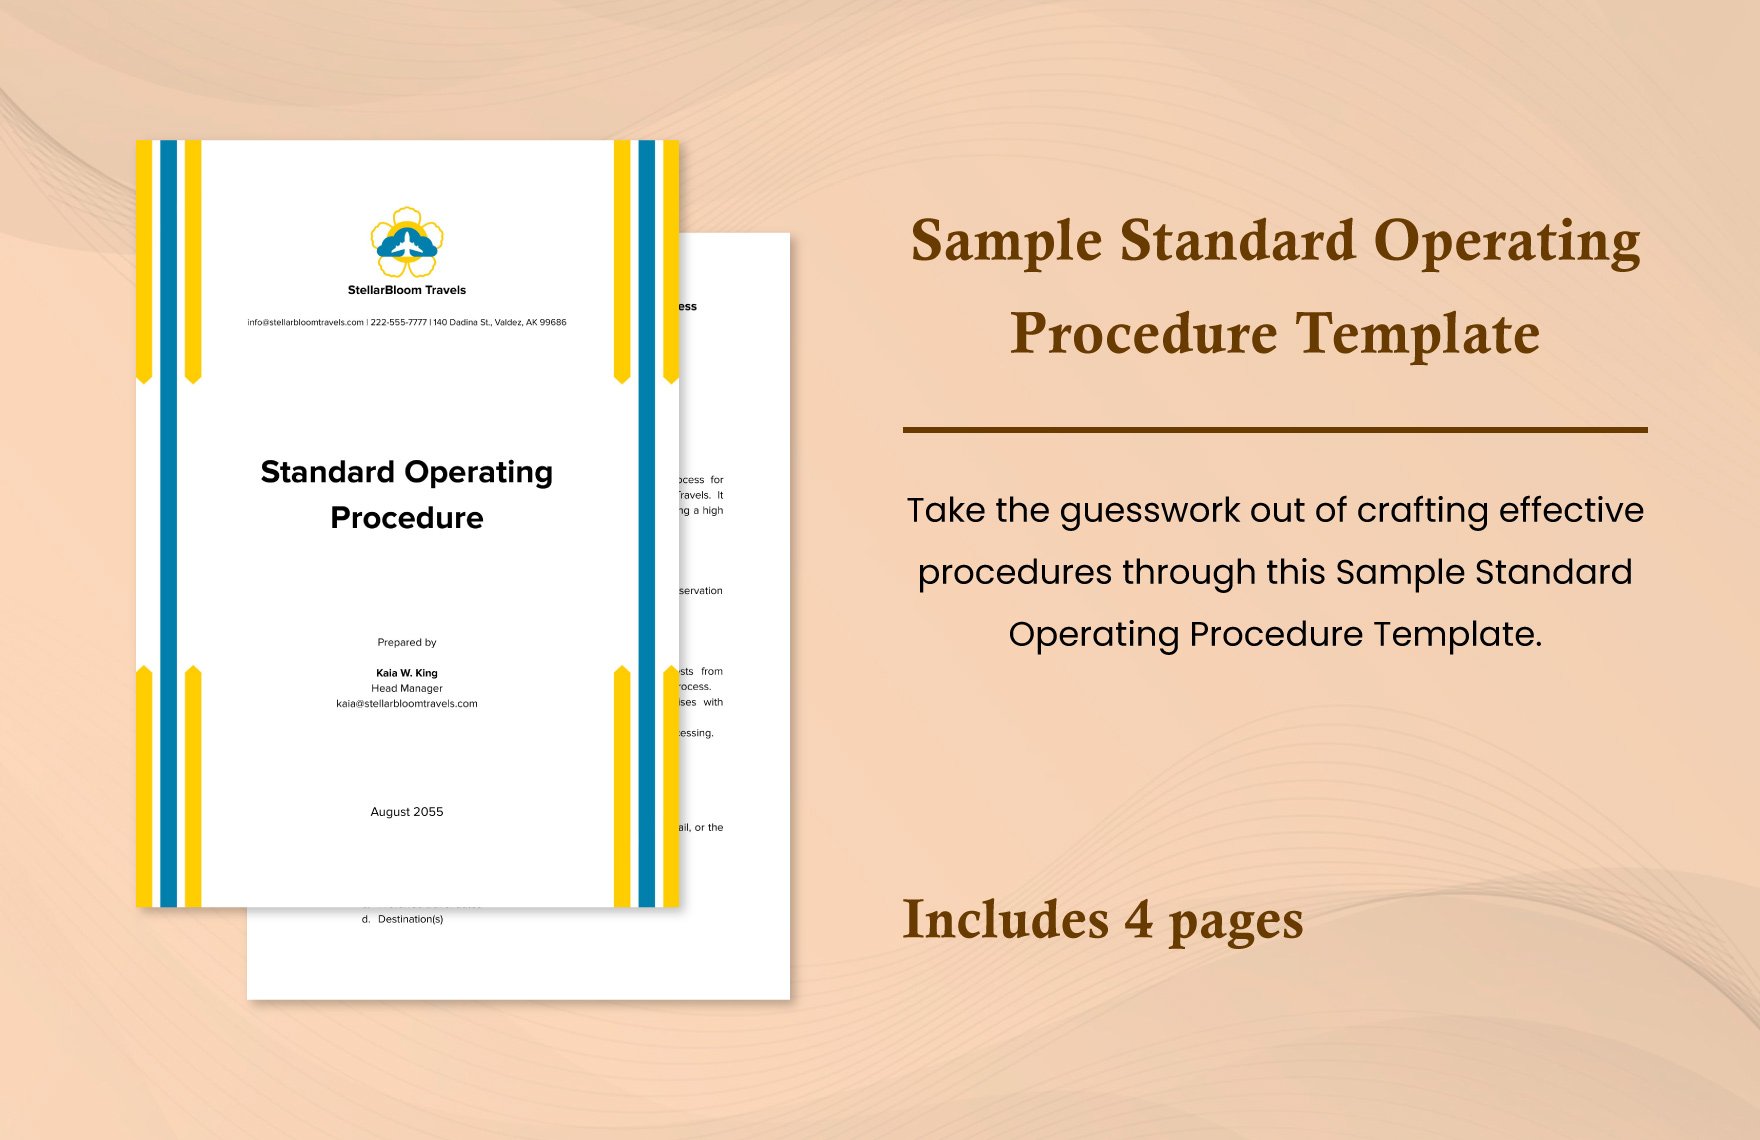 Sample Standard Operating Procedure Template